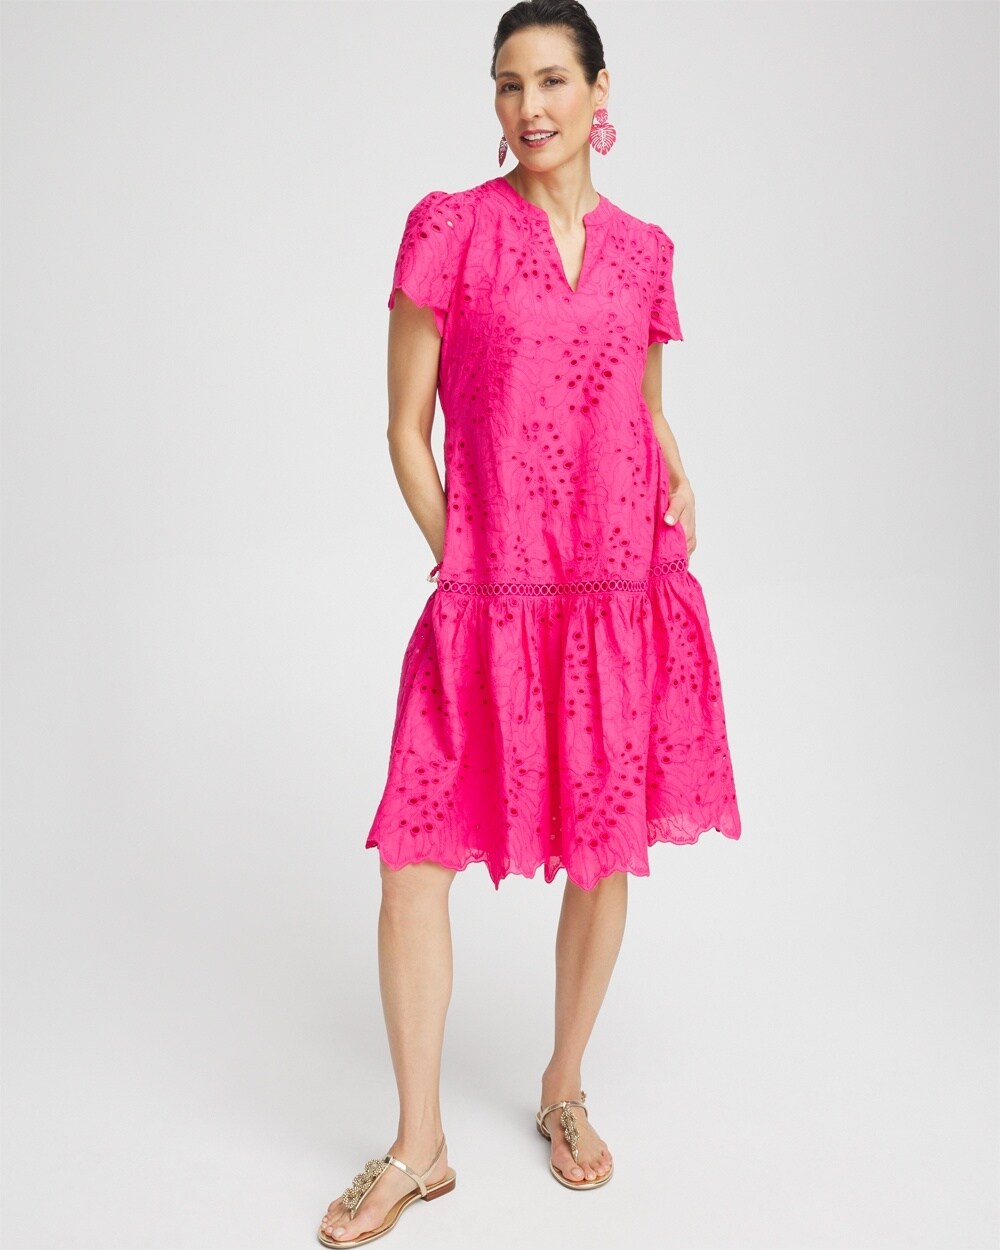 Lace Popover Dress